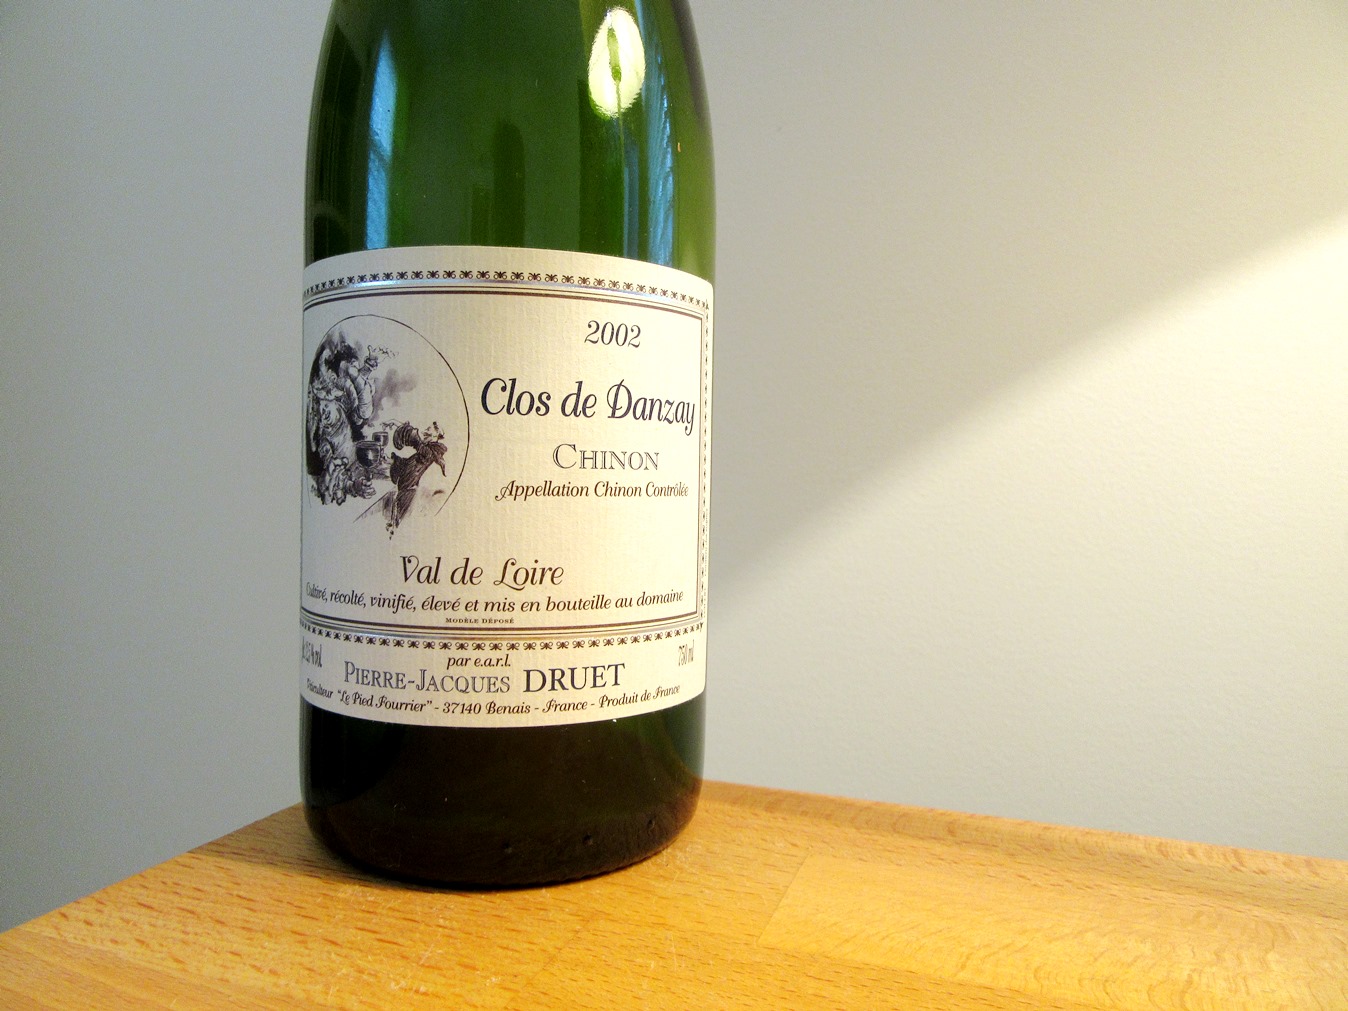 Pierre-Jacques Druet, Clos de Danzay Chinon 2002, Loire, France, Wine Casual